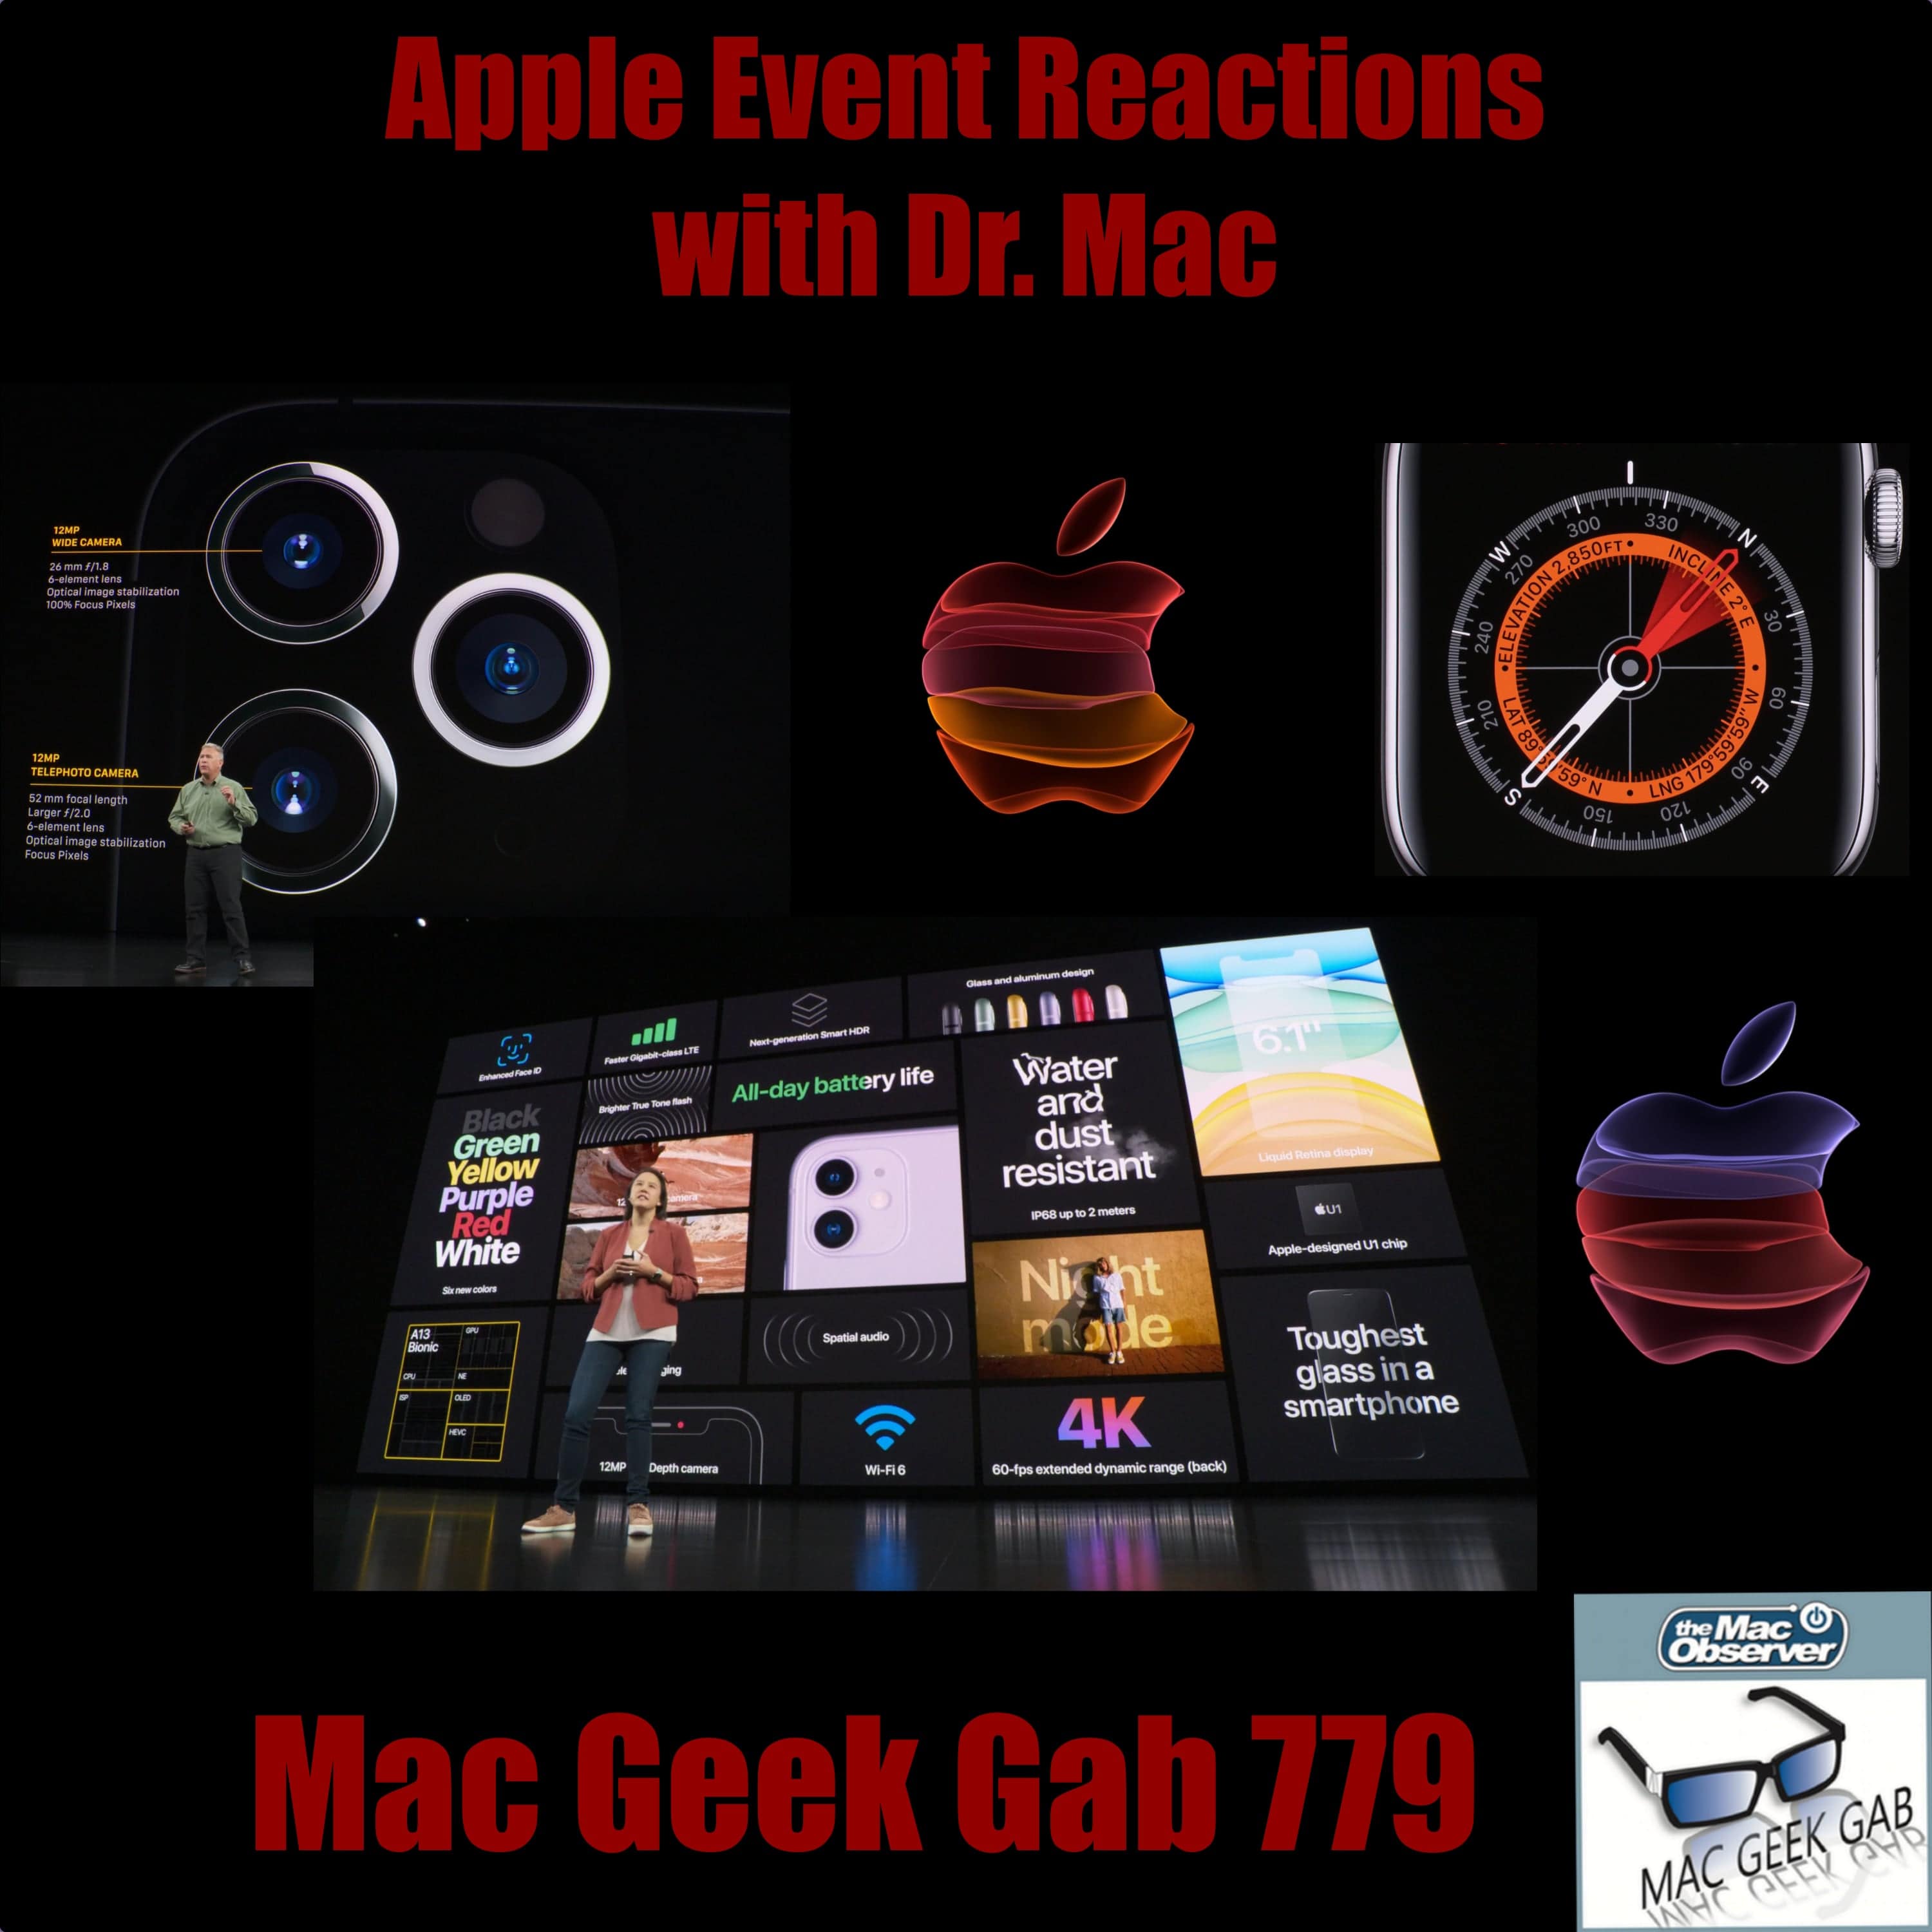 Apple Event Reactions with Bob “Dr. Mac” LeVitus – Mac Geek Gab 779